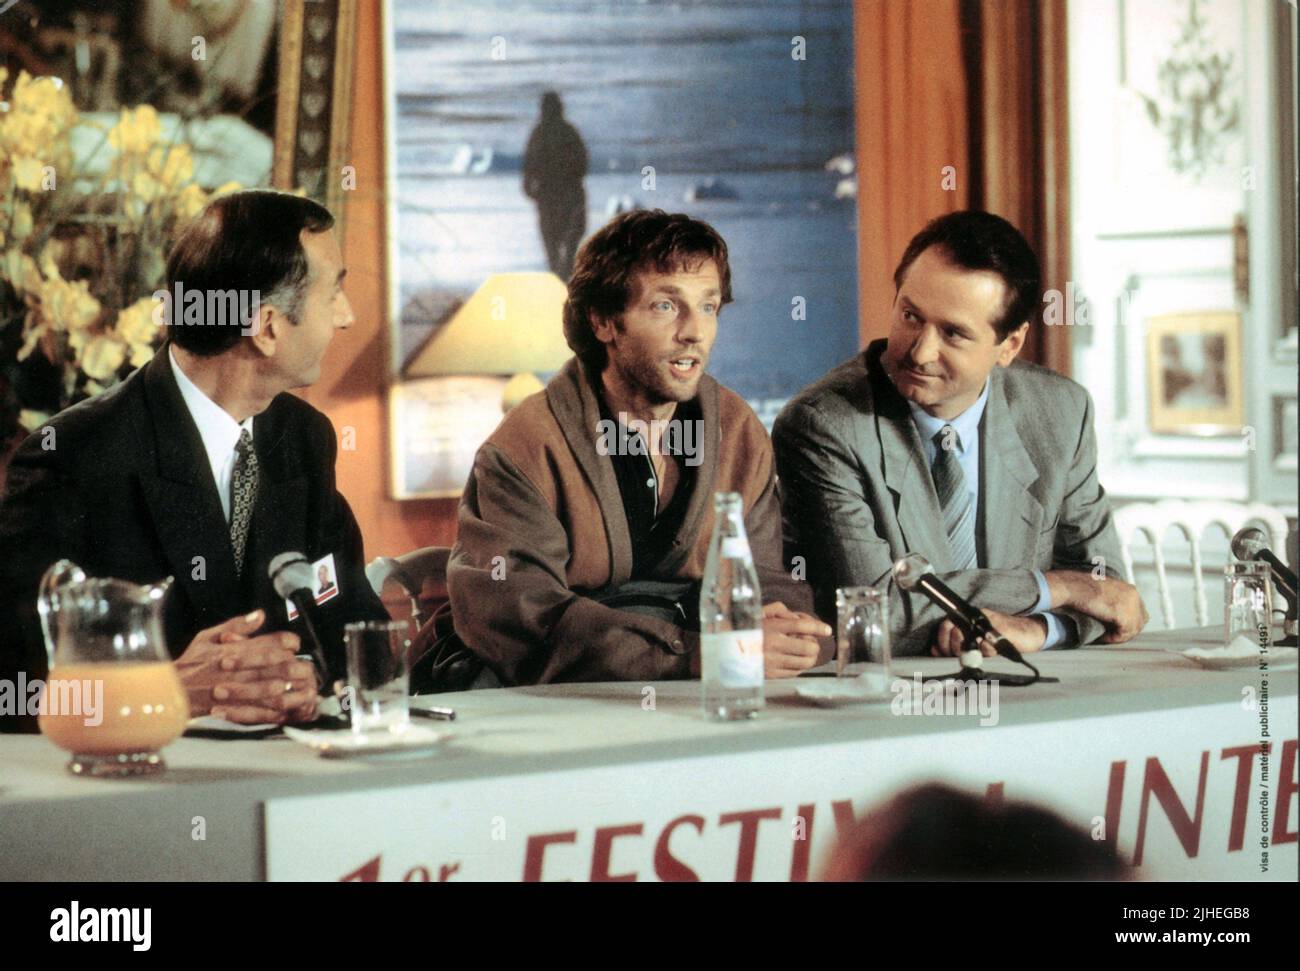 Comme des rois Year : 1997 France / Poland Director : François Velle Stephane Freiss, Mariusz Pujszo Stock Photo